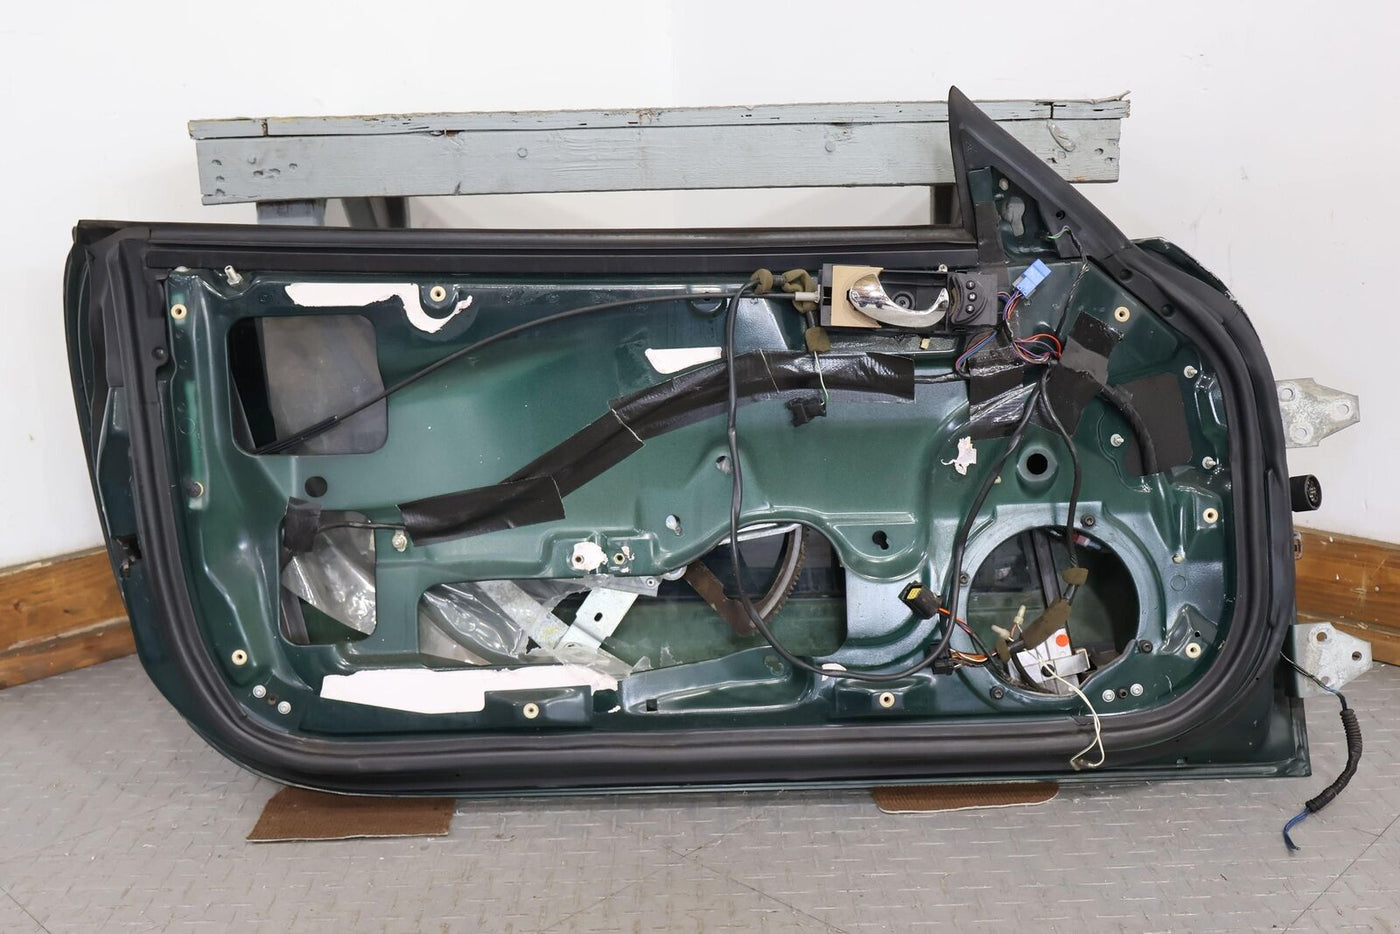 97-04 Jaguar XK8 Left Driver Door W/Glass (British Racing HFB) 1 Visible Ding